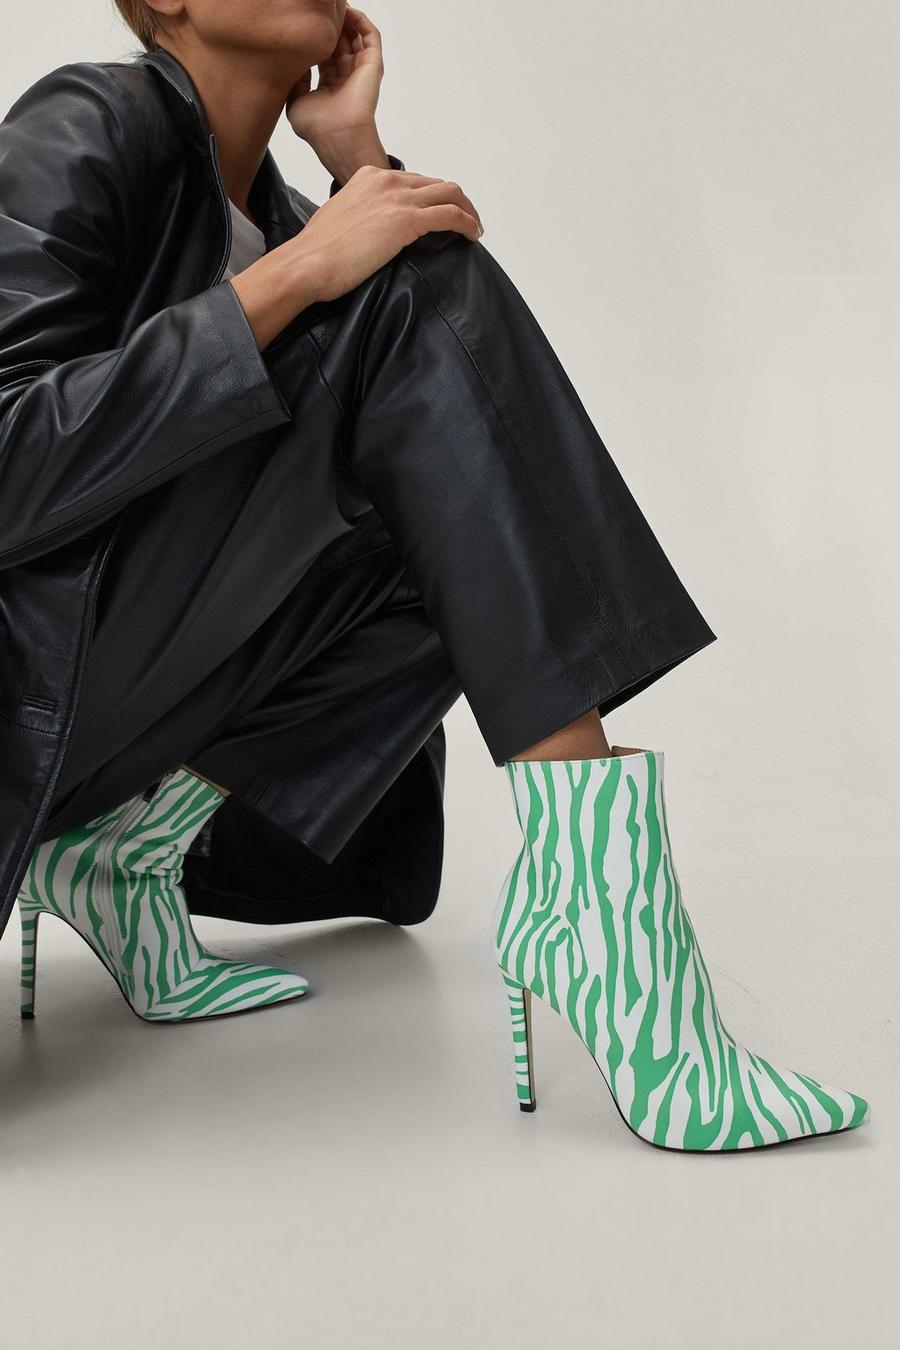 Green Zebra Print Stiletto Ankle Boots